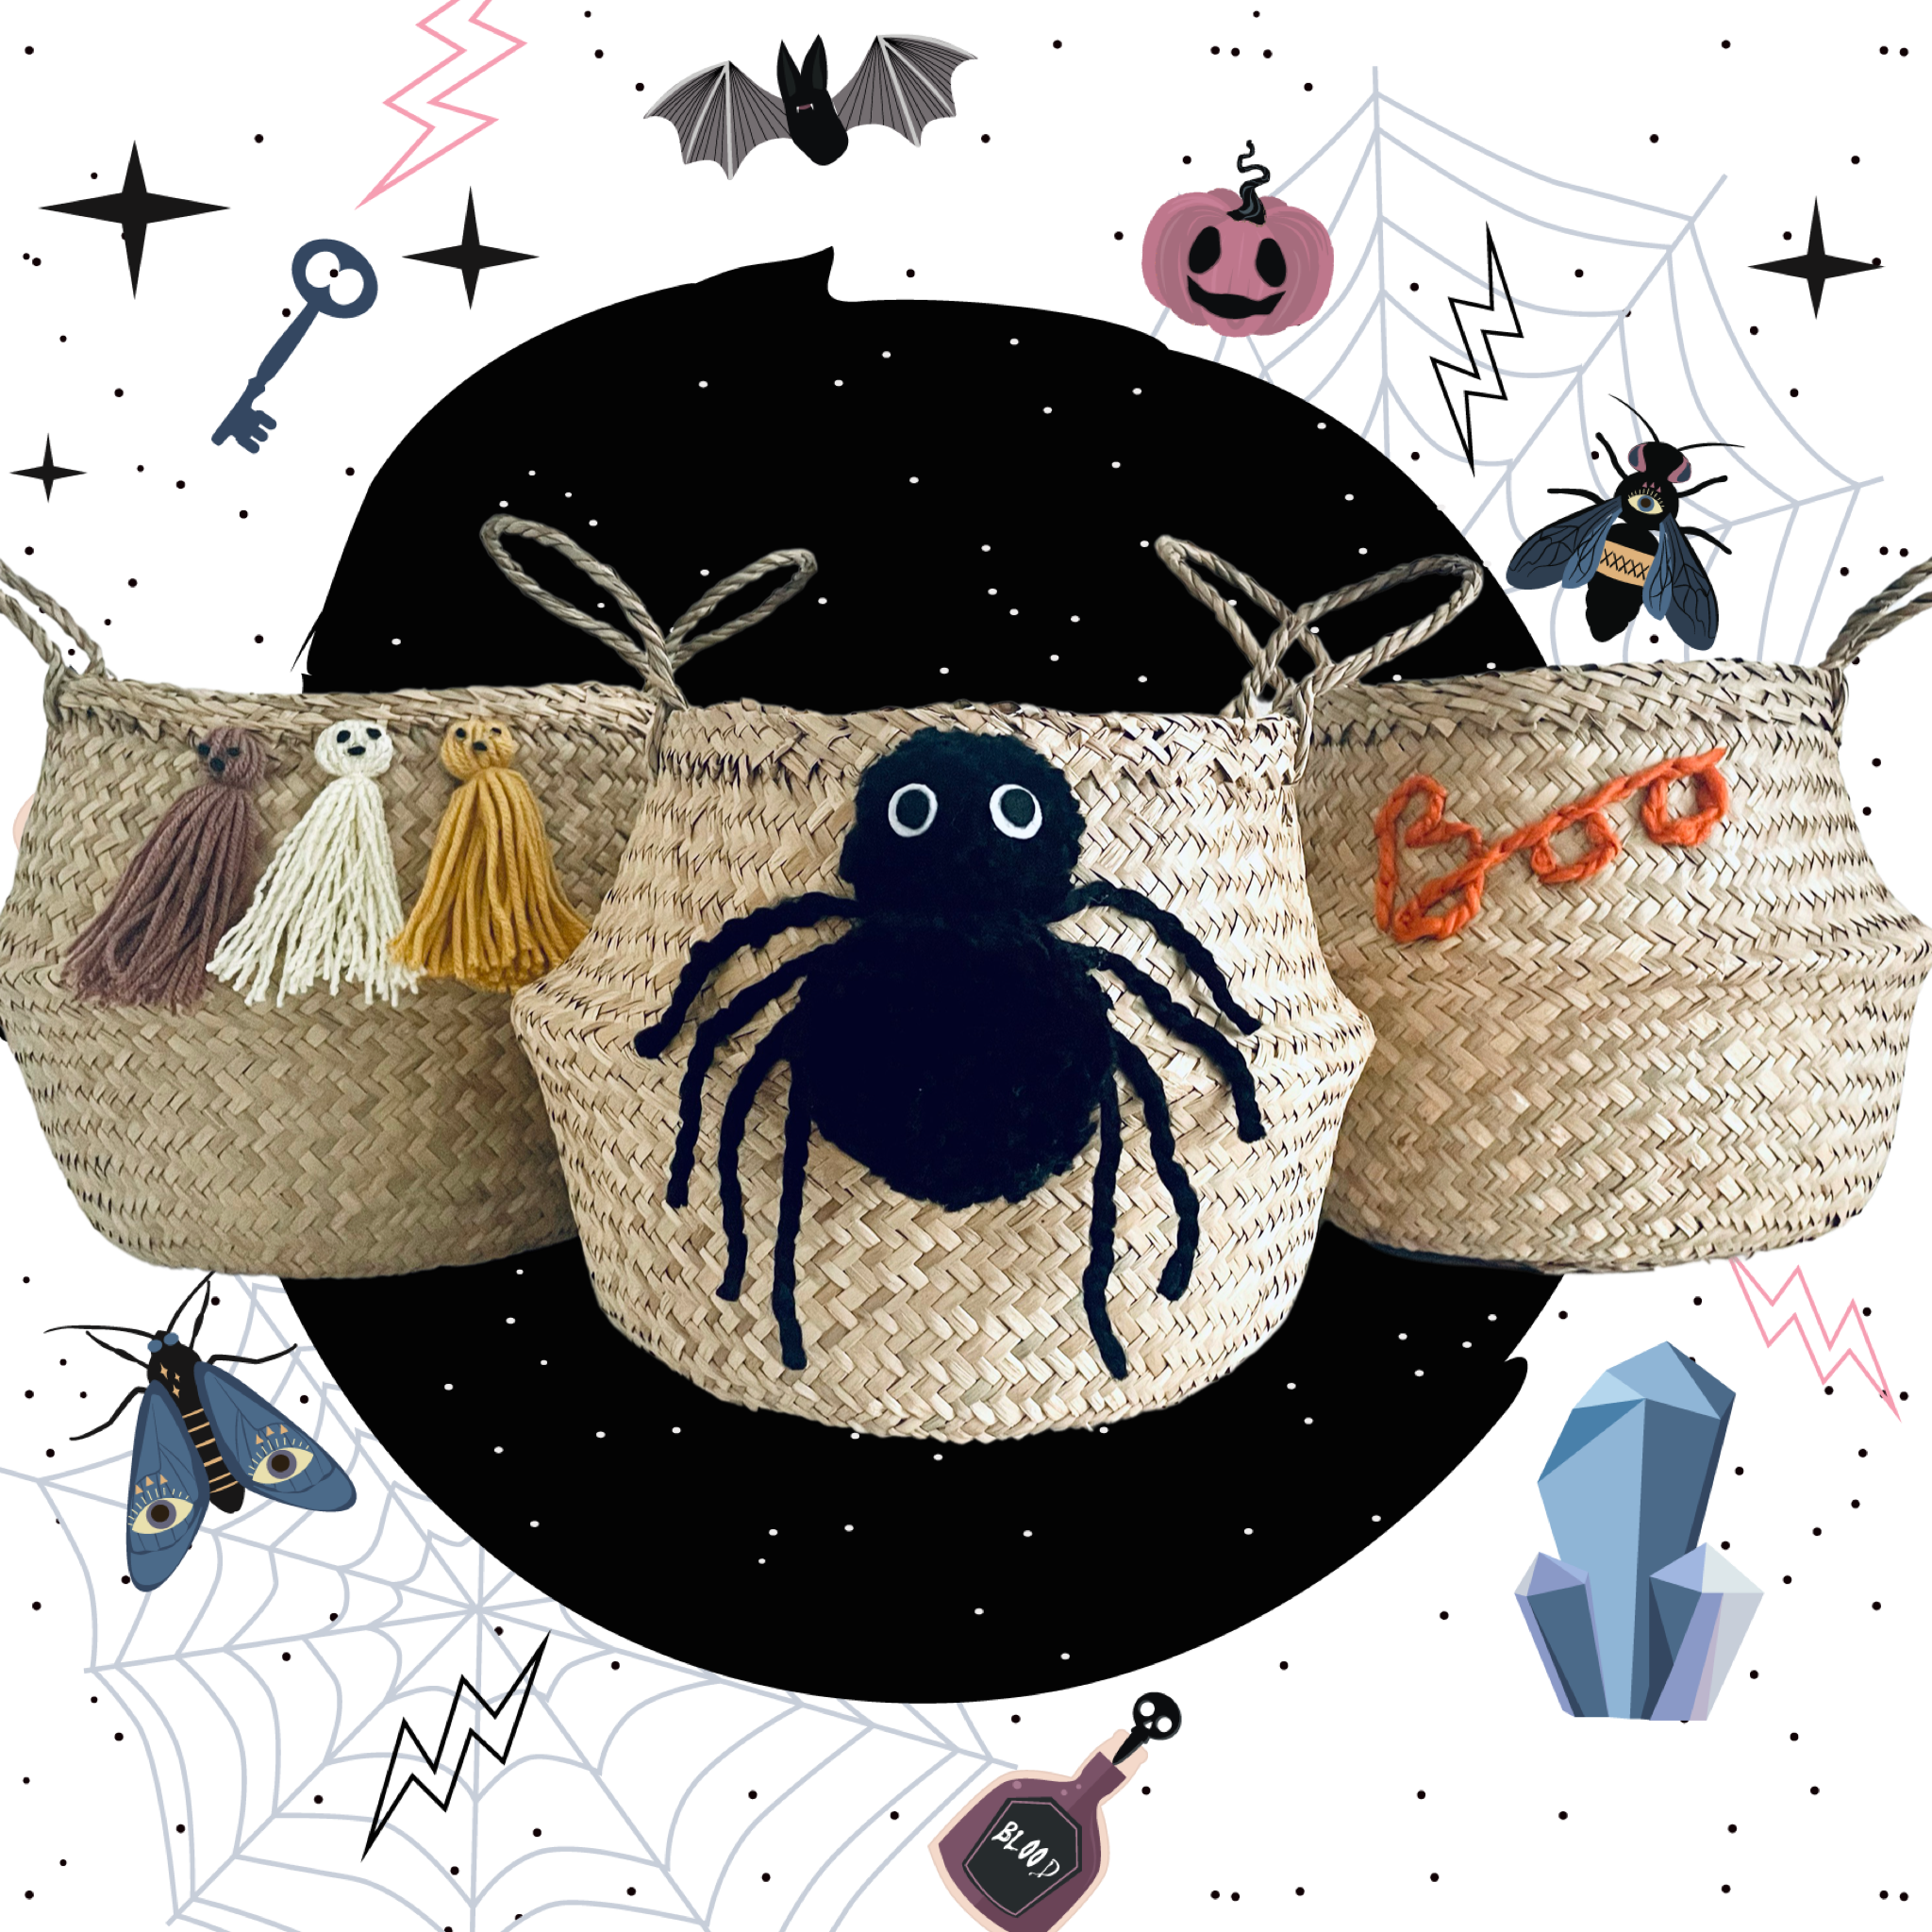 Spider basket - Medium - Bellybambino